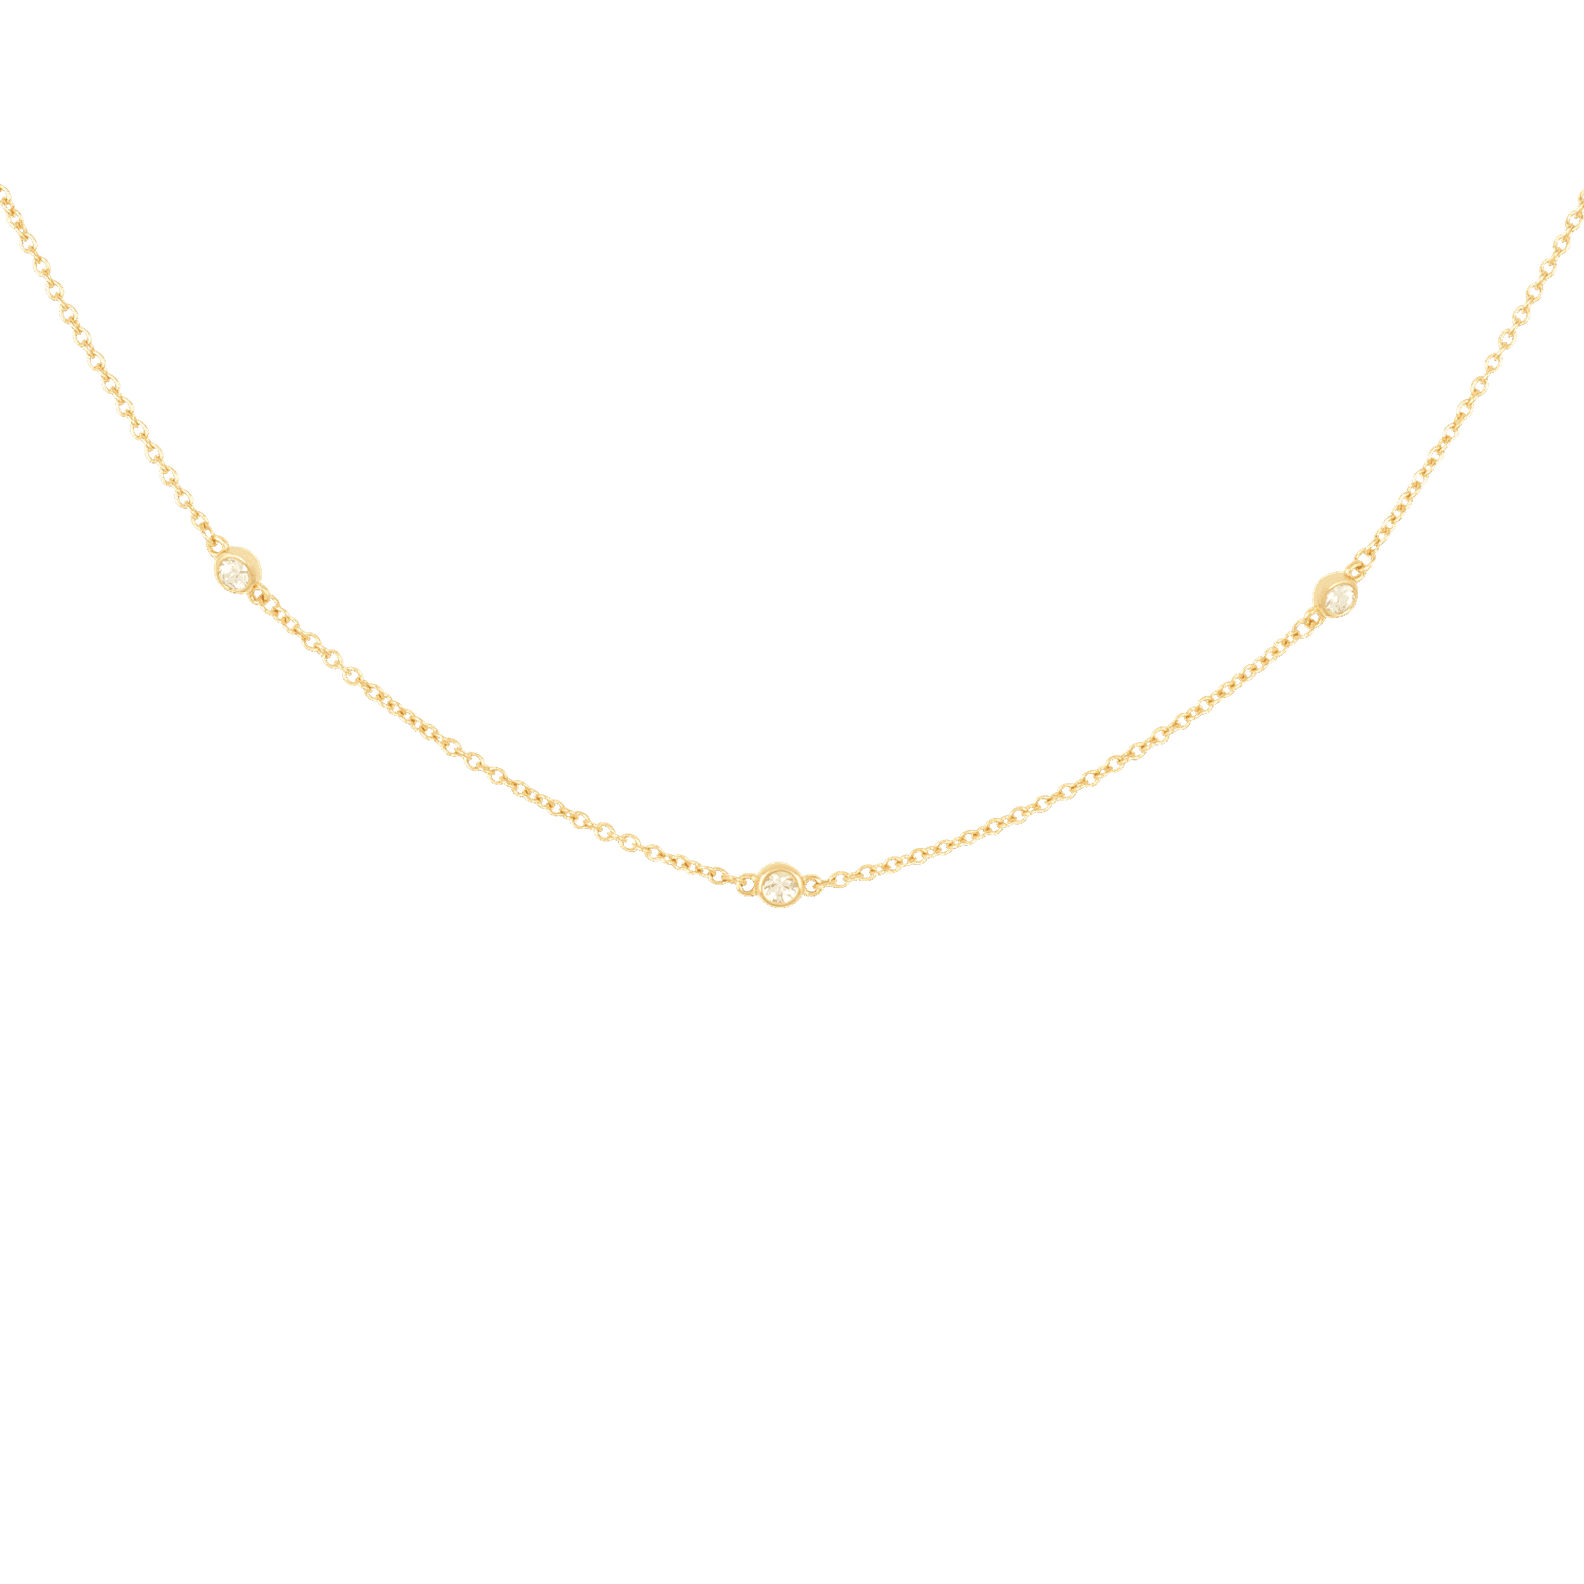 Best Jewelry Gifts For Women 2019 | POPSUGAR Fashion